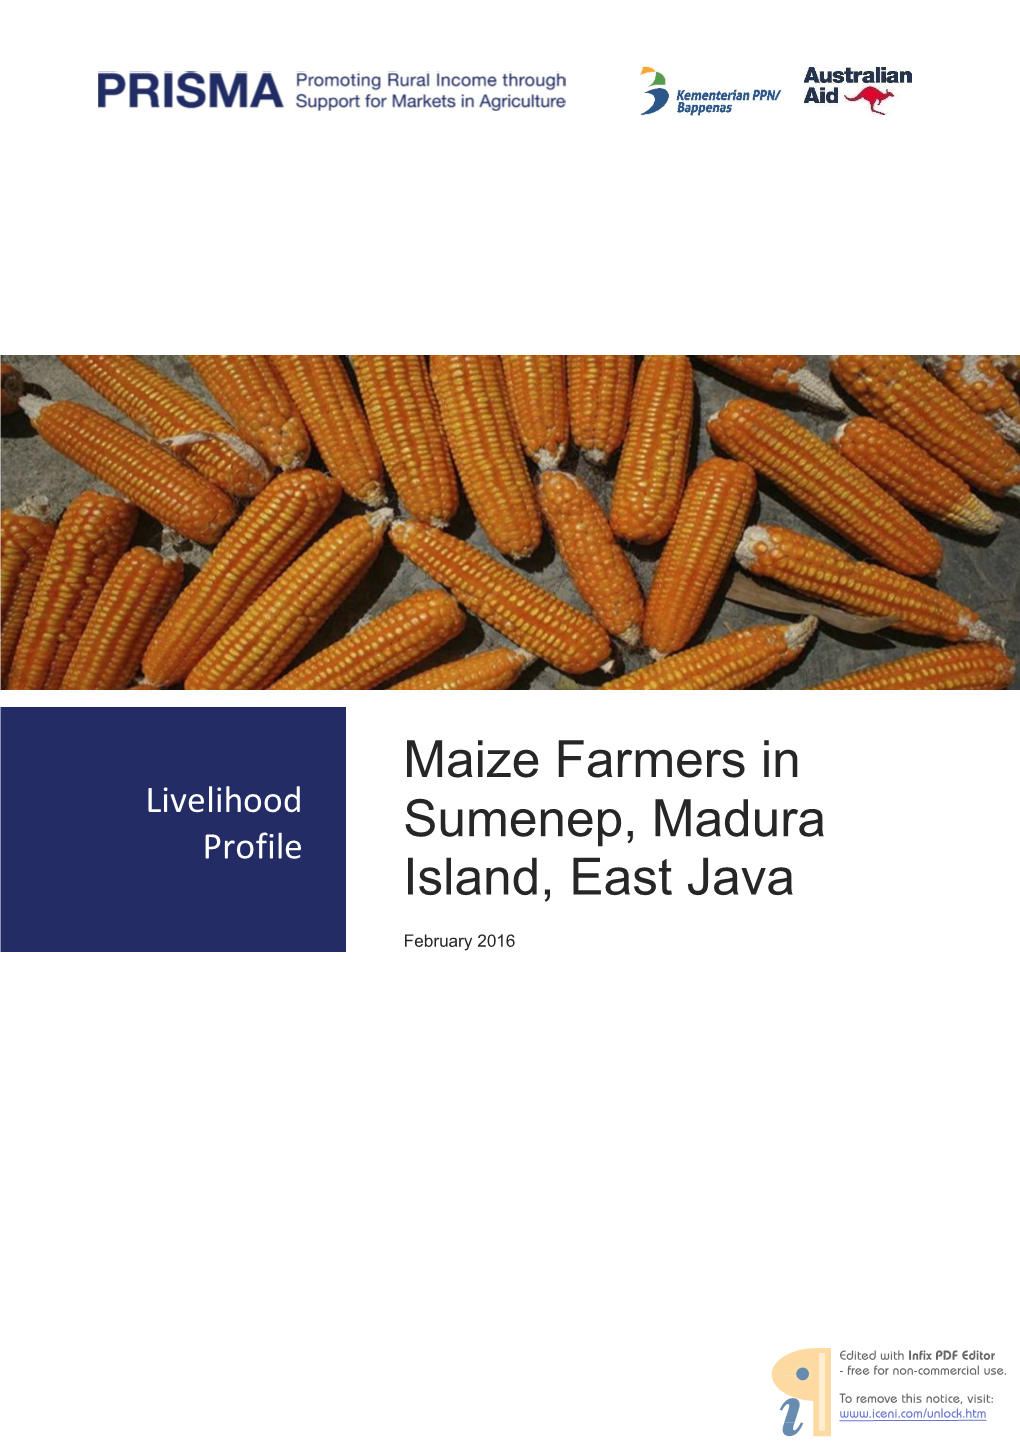 Maize Farmers in Sumenep, Madura Island, East Java – February 2016